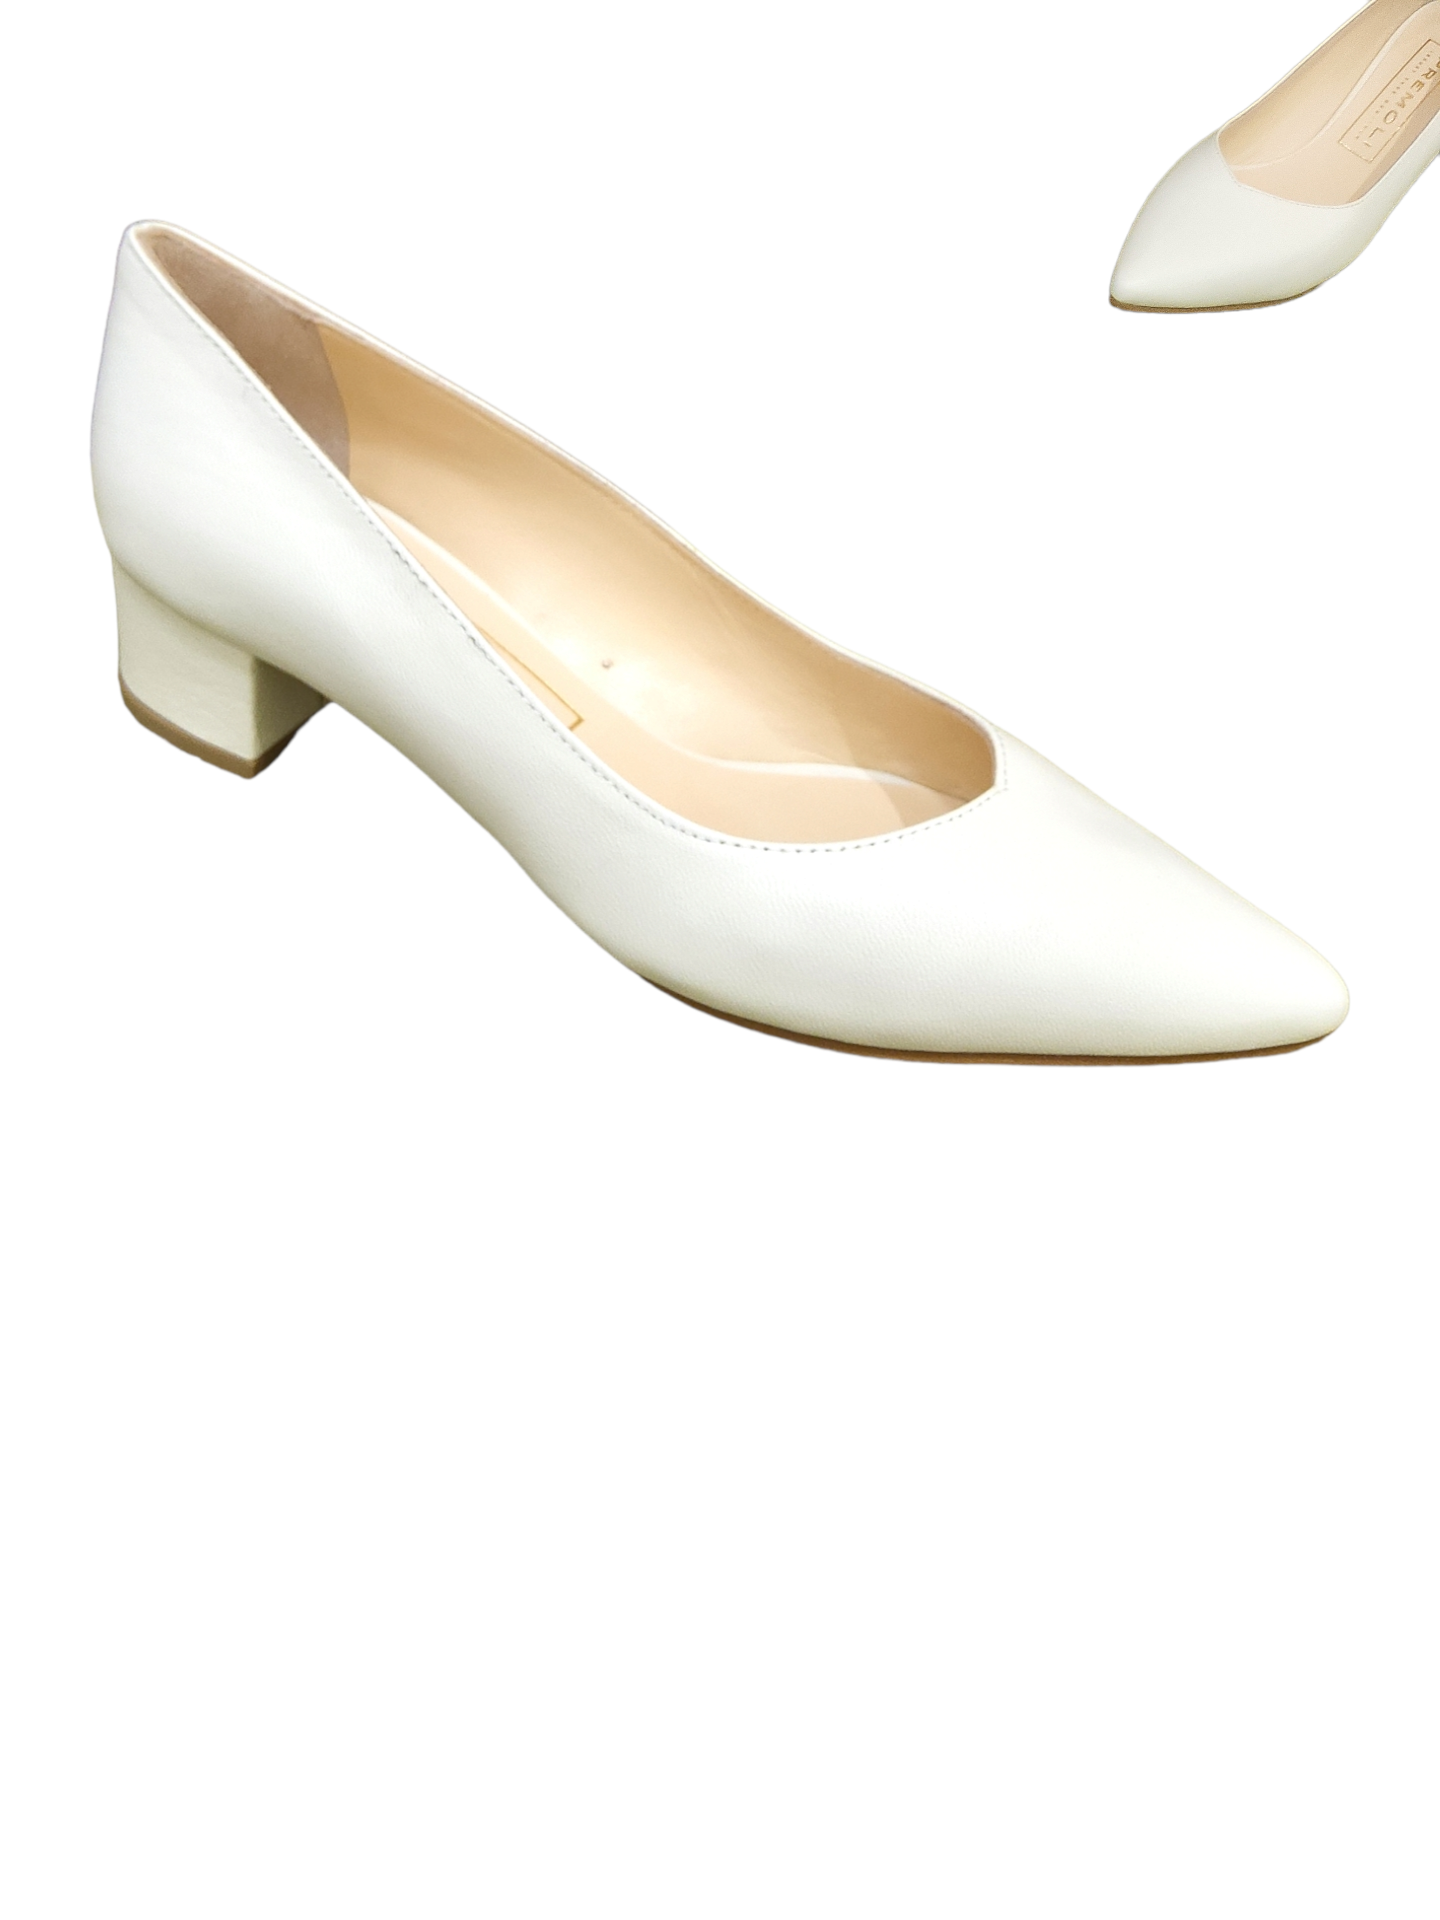 Cream leather court shoe